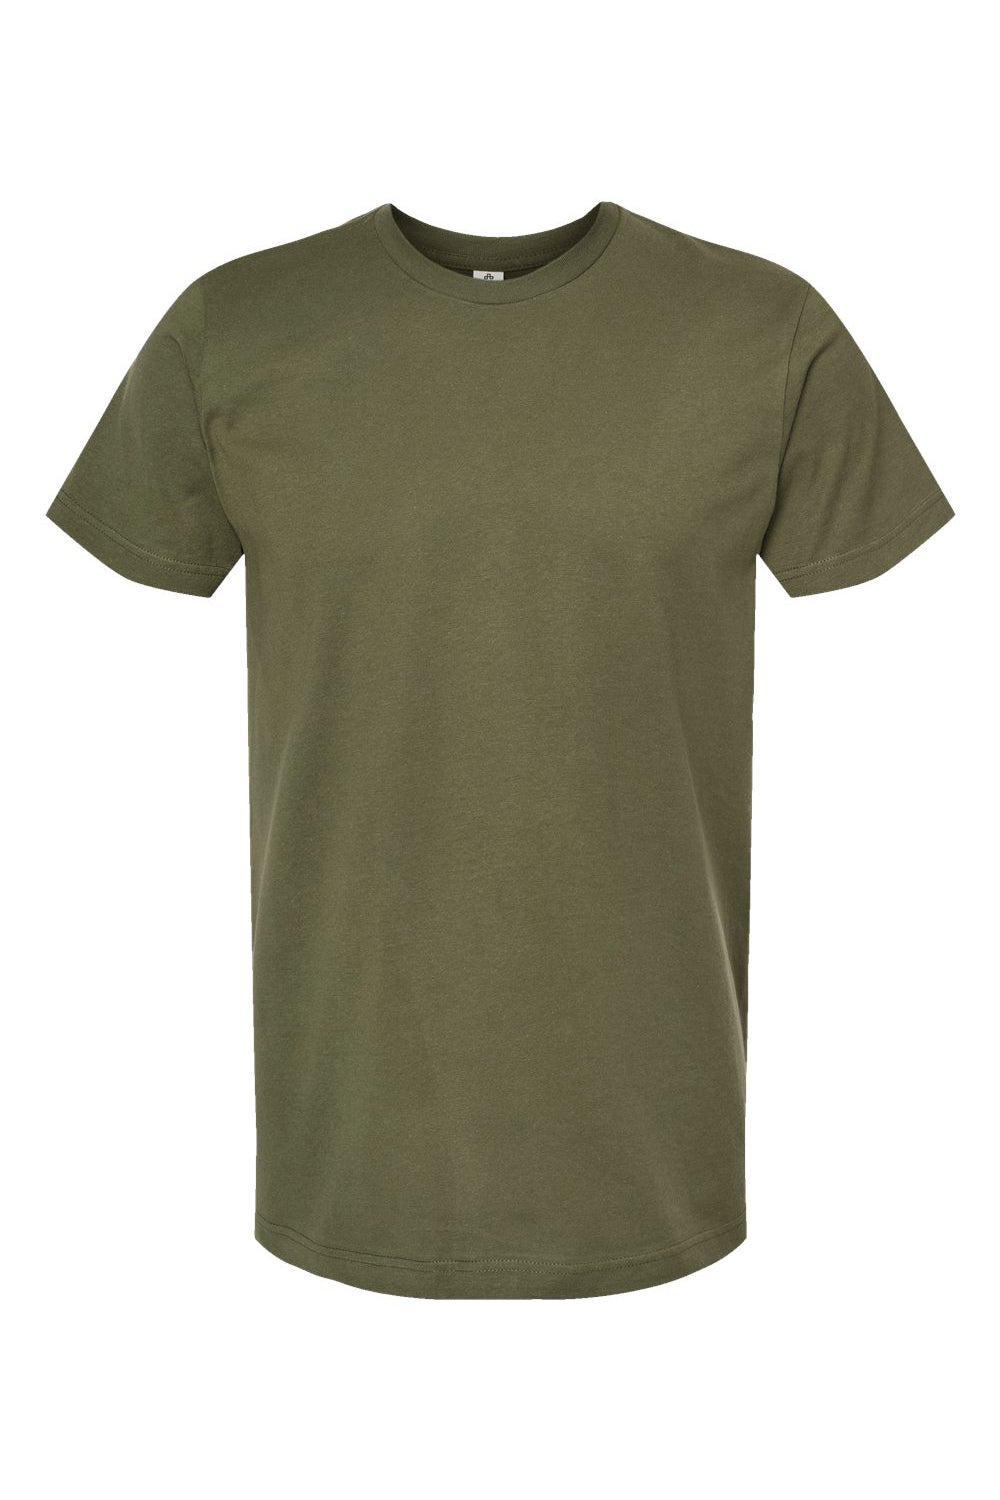 Tultex 202 Mens Fine Jersey Short Sleeve Crewneck T-Shirt Military Green Flat Front